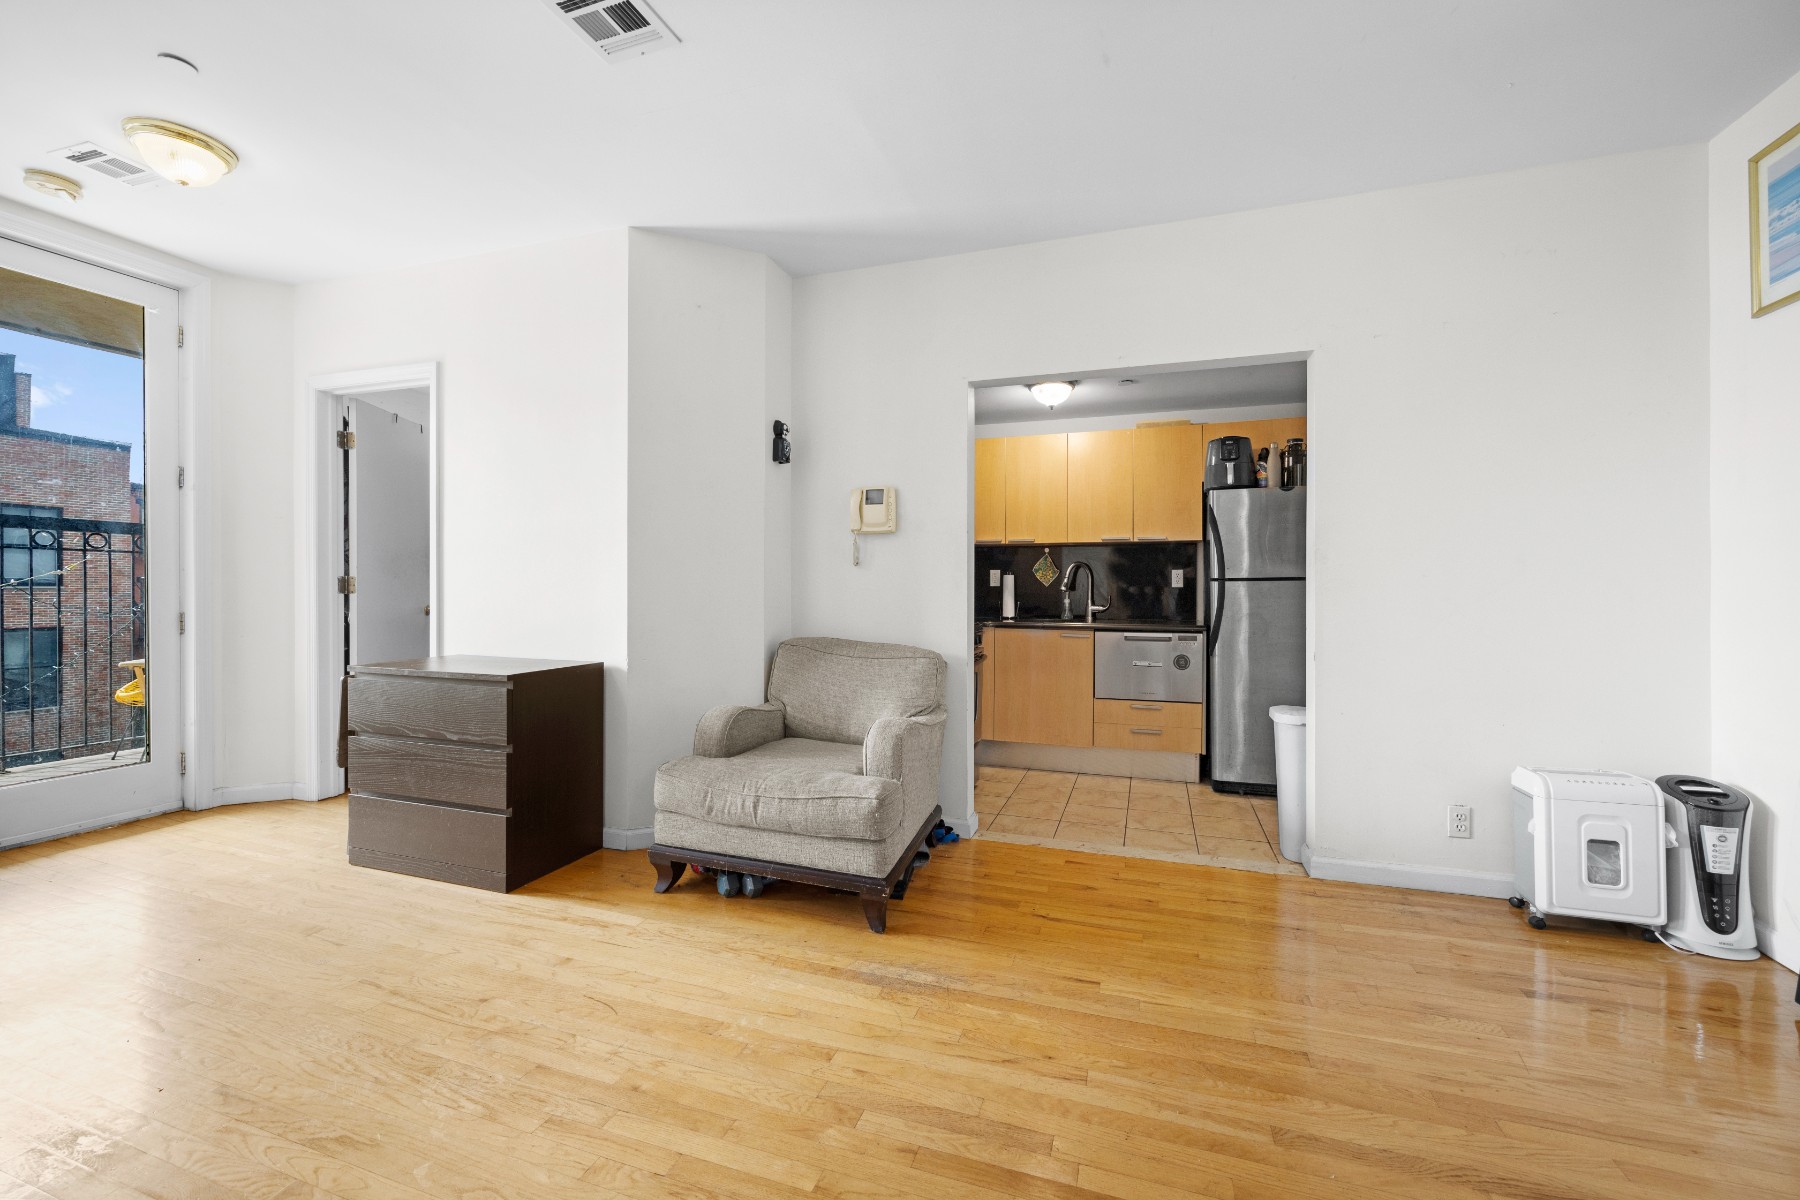 198 21st Street 3B, Greenwood, Brooklyn, New York - 2 Bedrooms  
1.5 Bathrooms  
4 Rooms - 